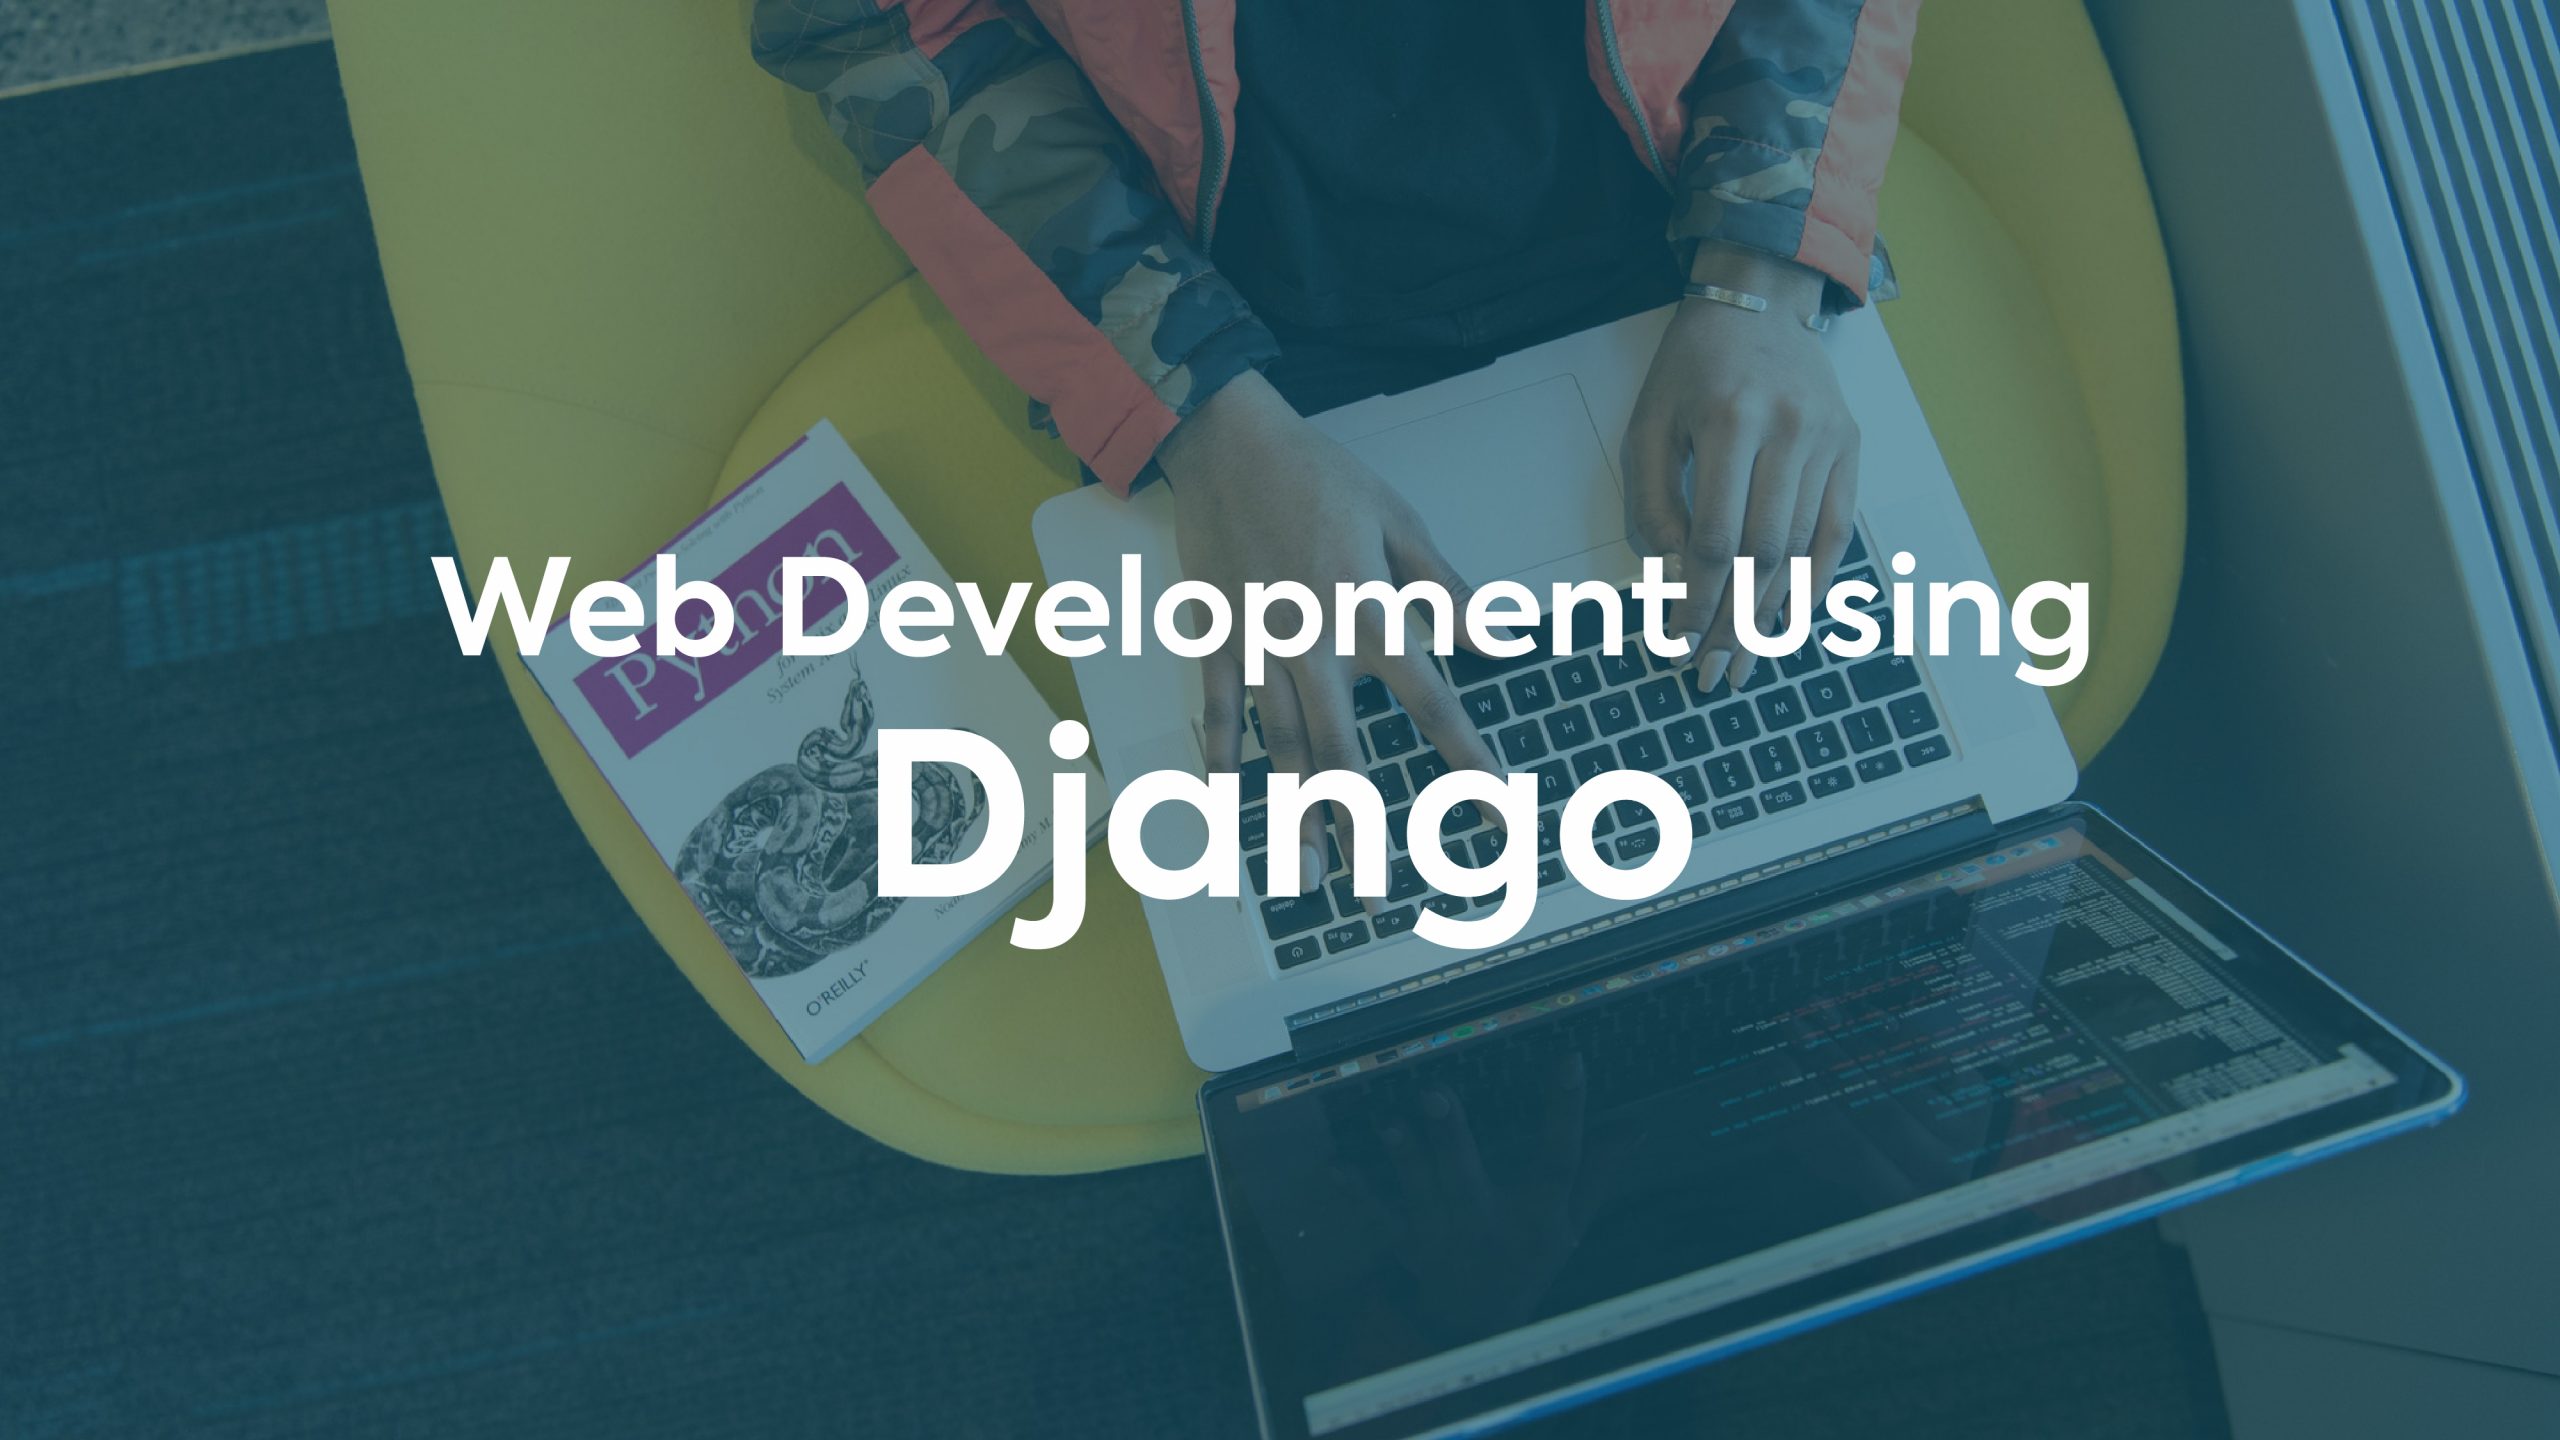 Web Development Using Django Genese Cloud Academy Uk 4809